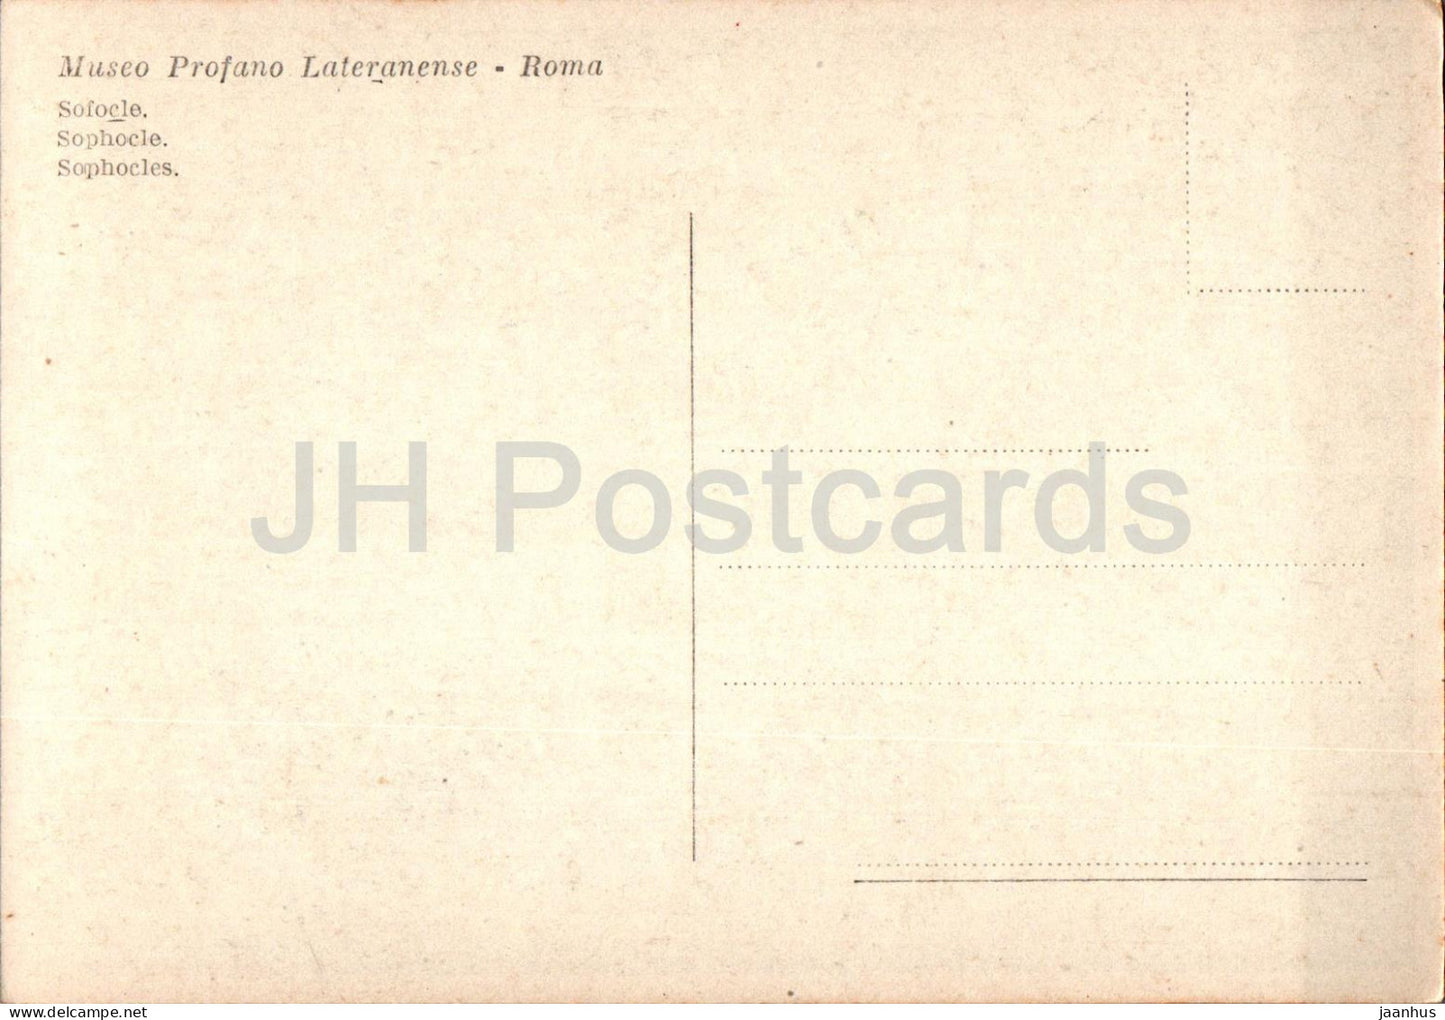 Roma - Museo Profano Lateranense - Sofocle - Sophocle - sculpture - carte postale ancienne - Italie - inutilisé